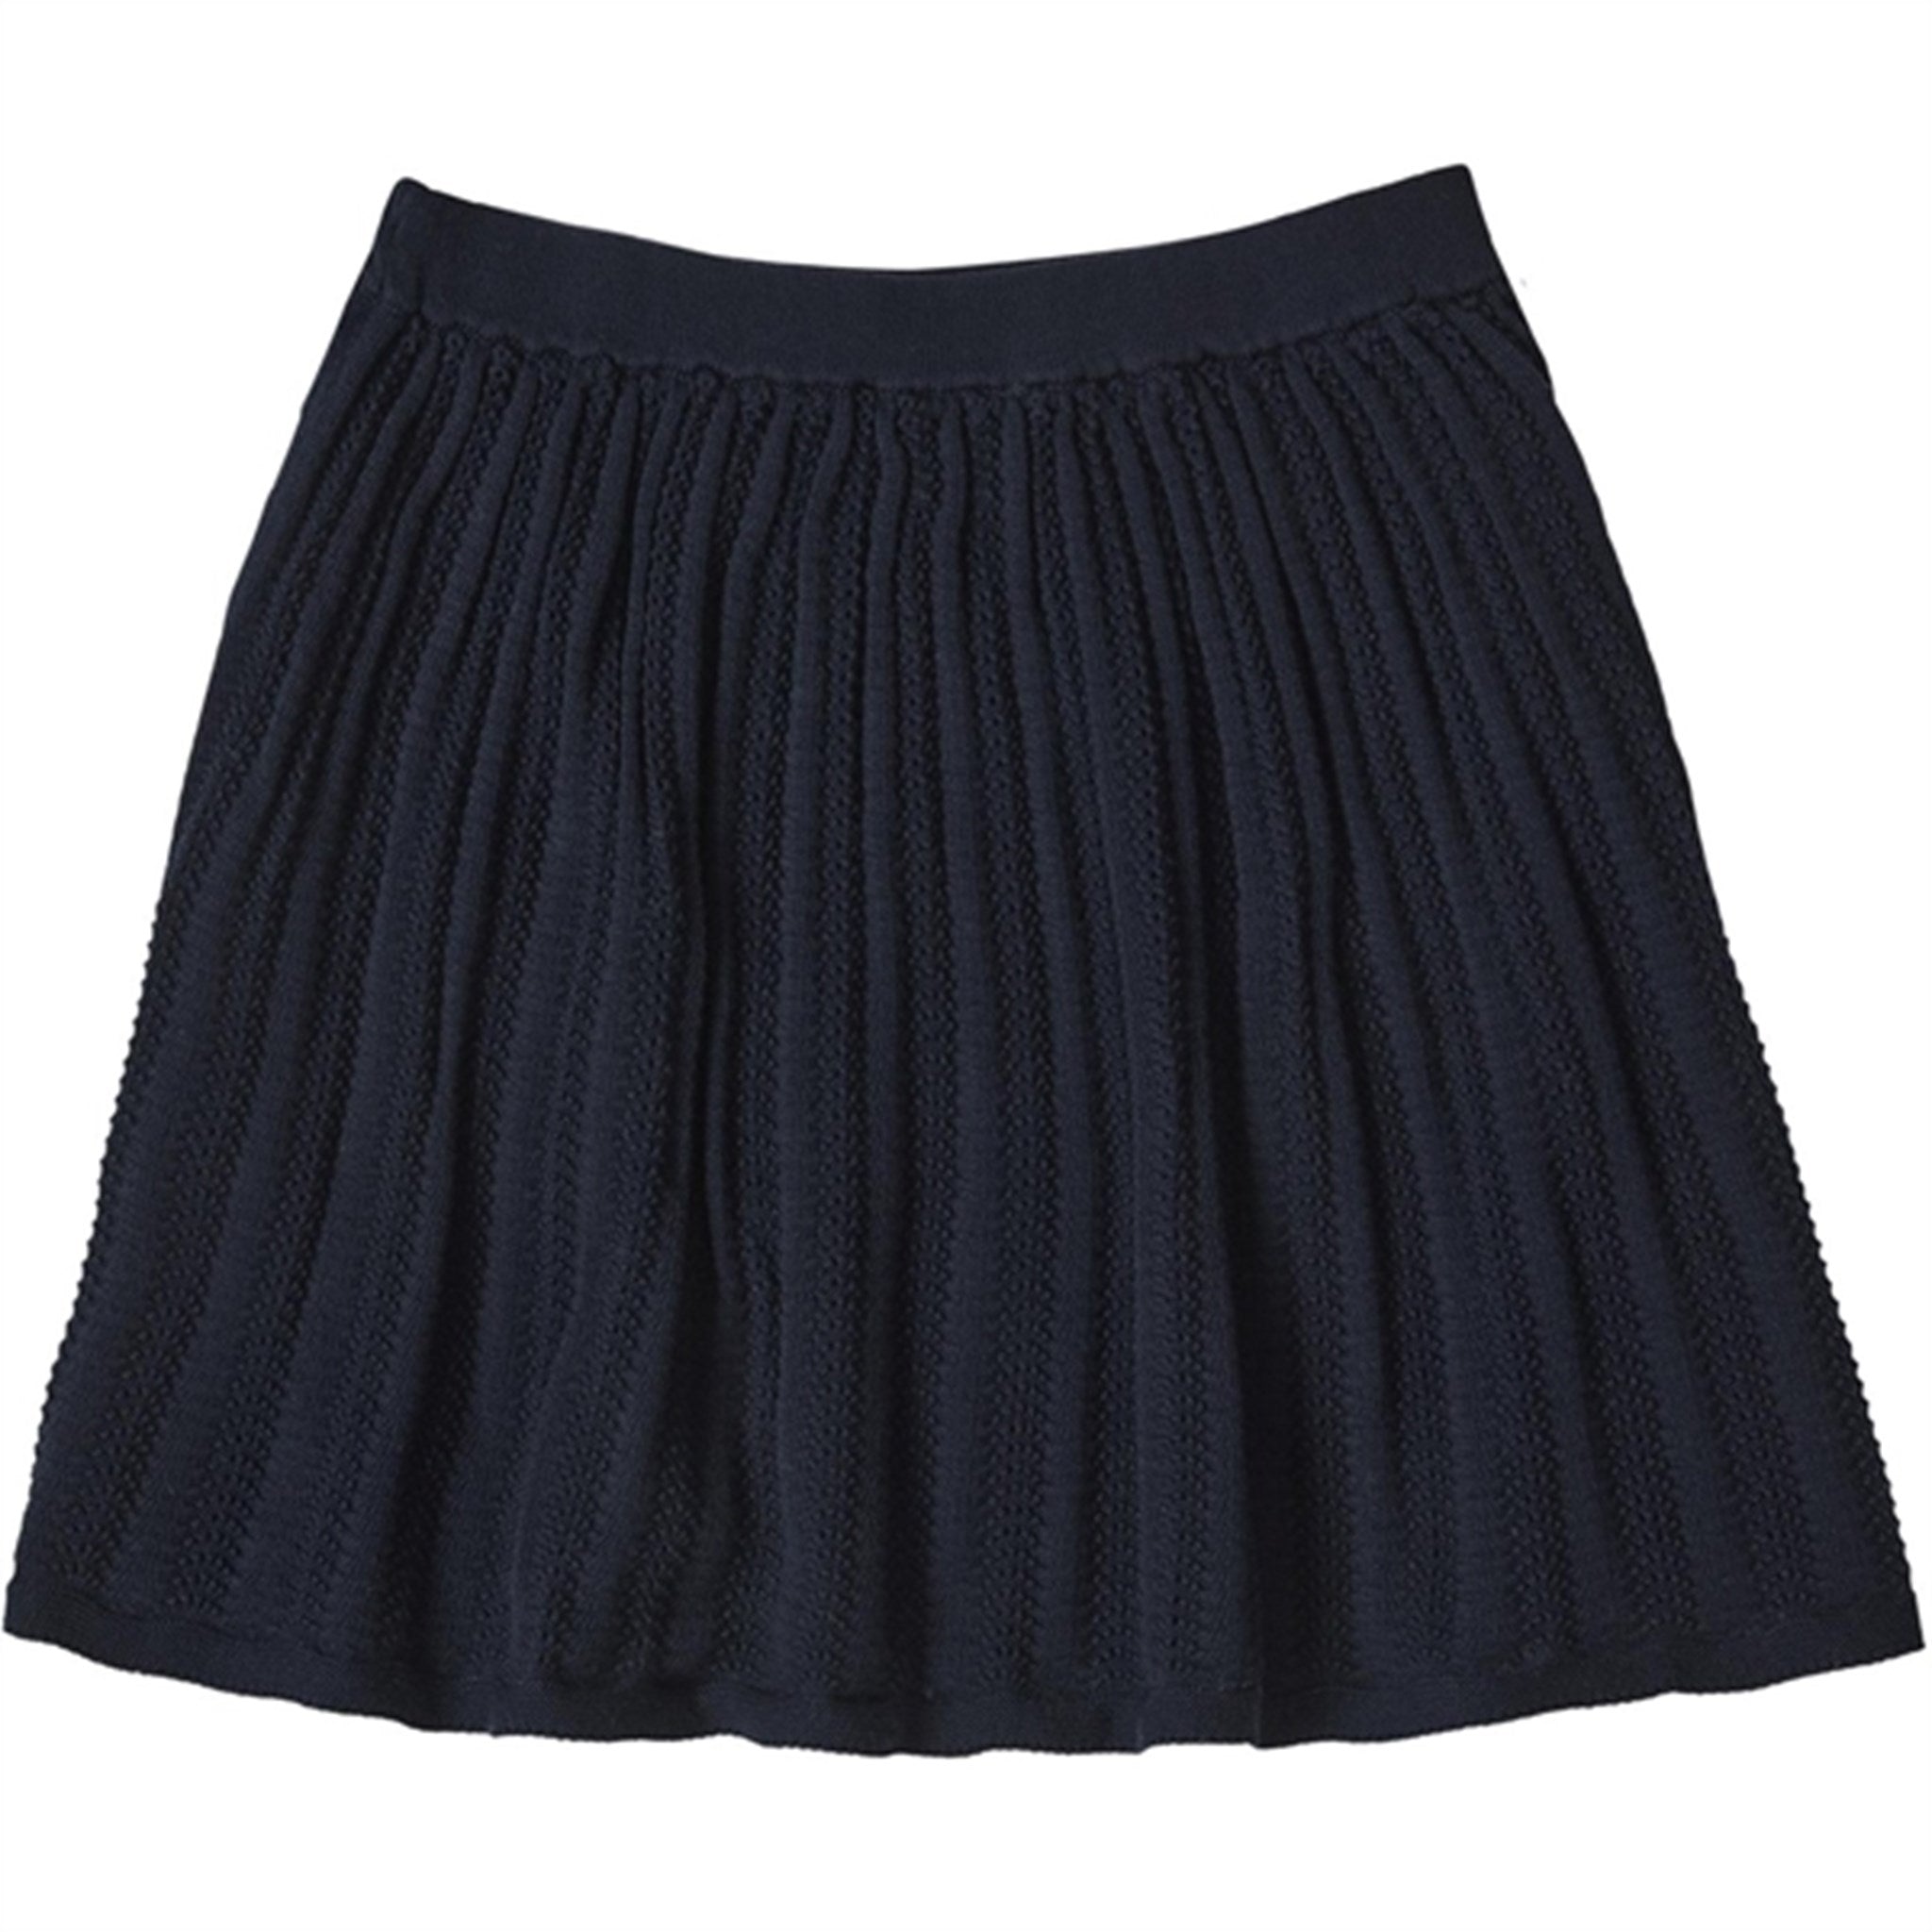 FUB Dark Navy Pointelle Skirt